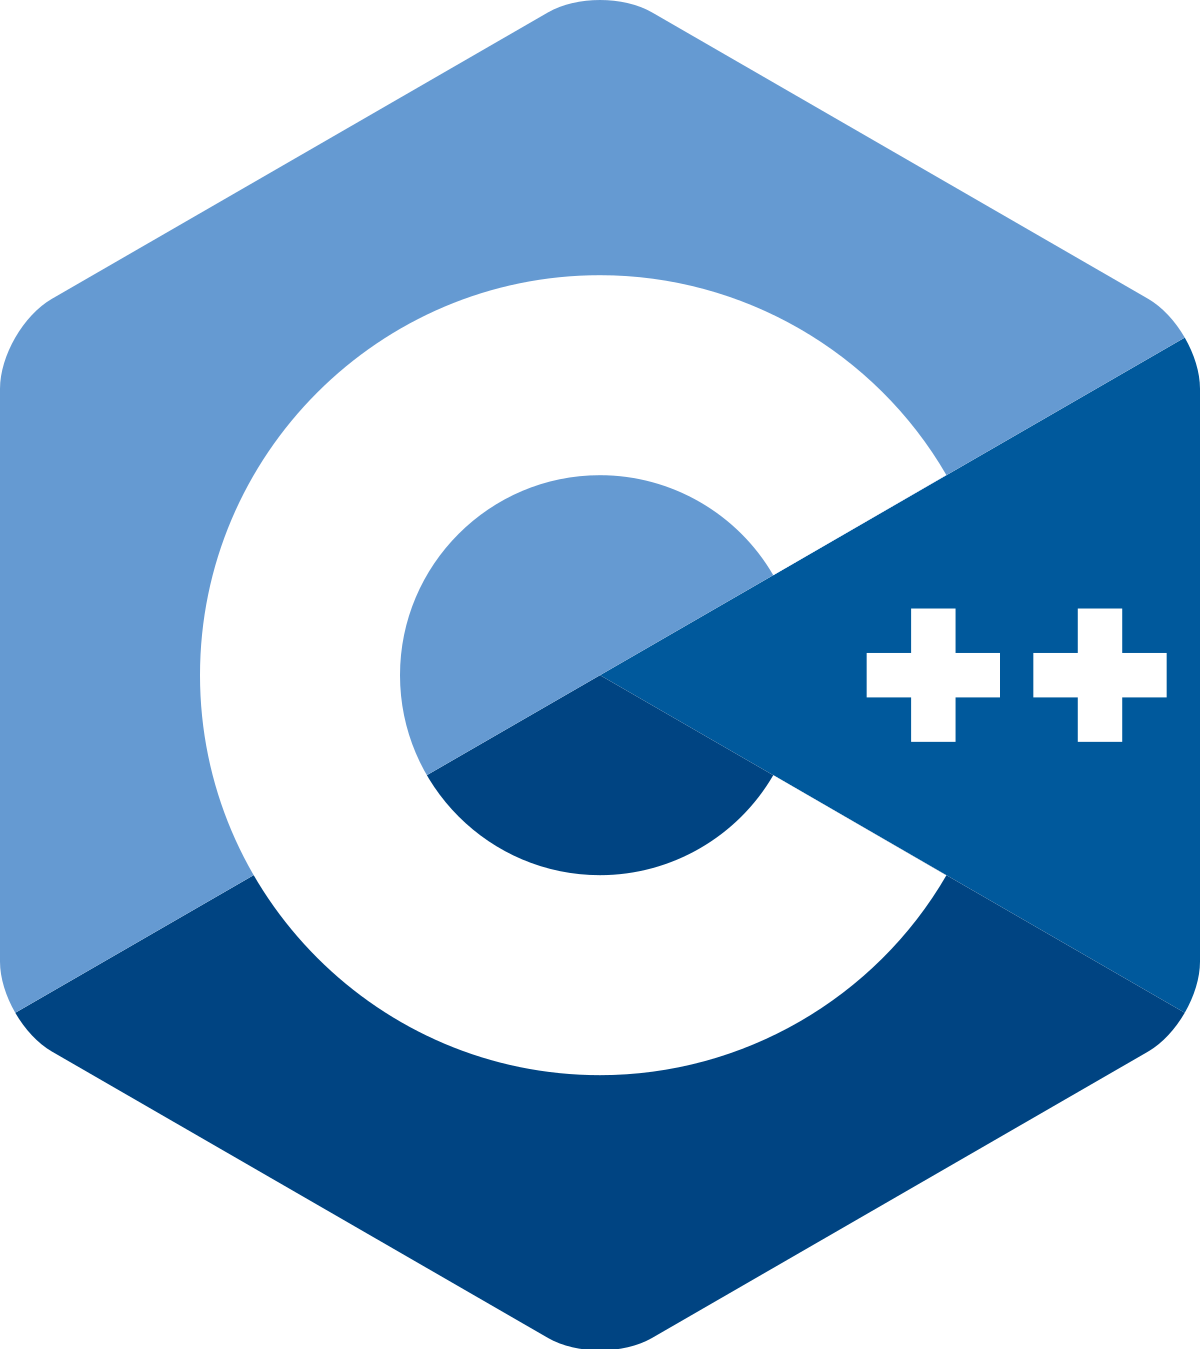 Middle C++ Development Engineer | Bucharest